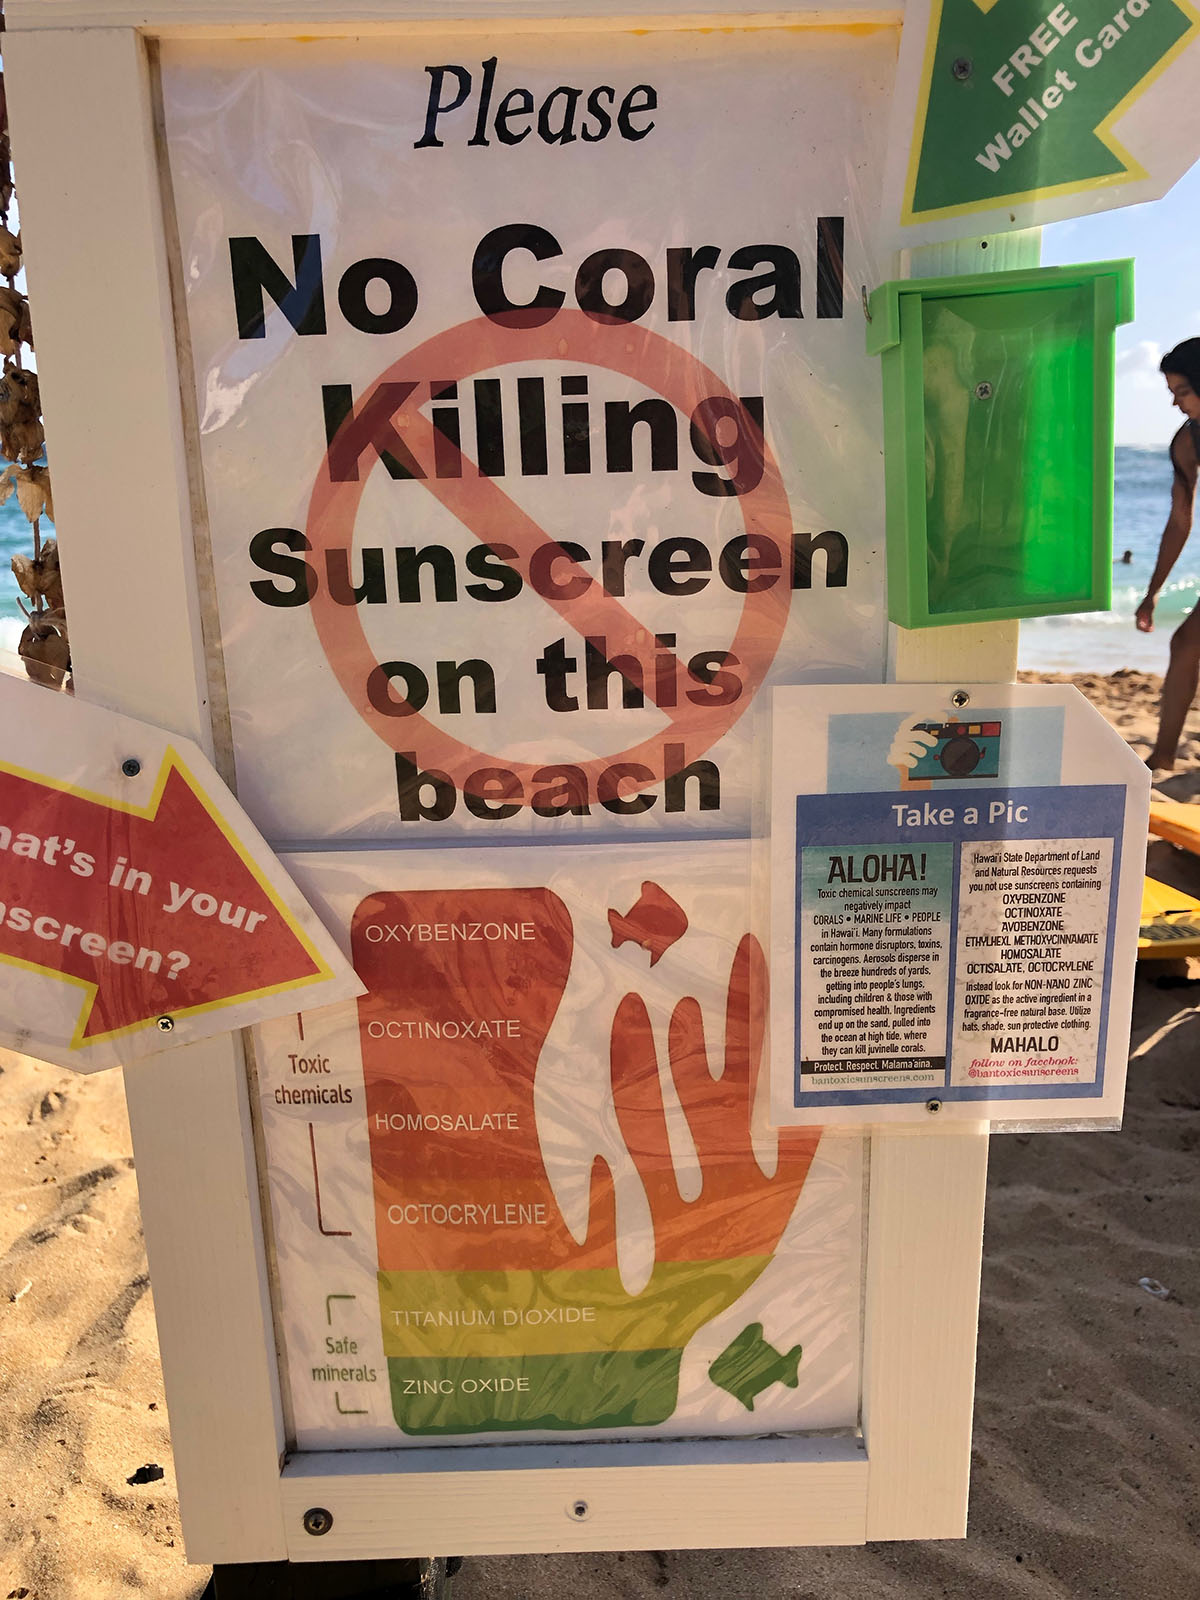 reef safe sunscreen drugstore